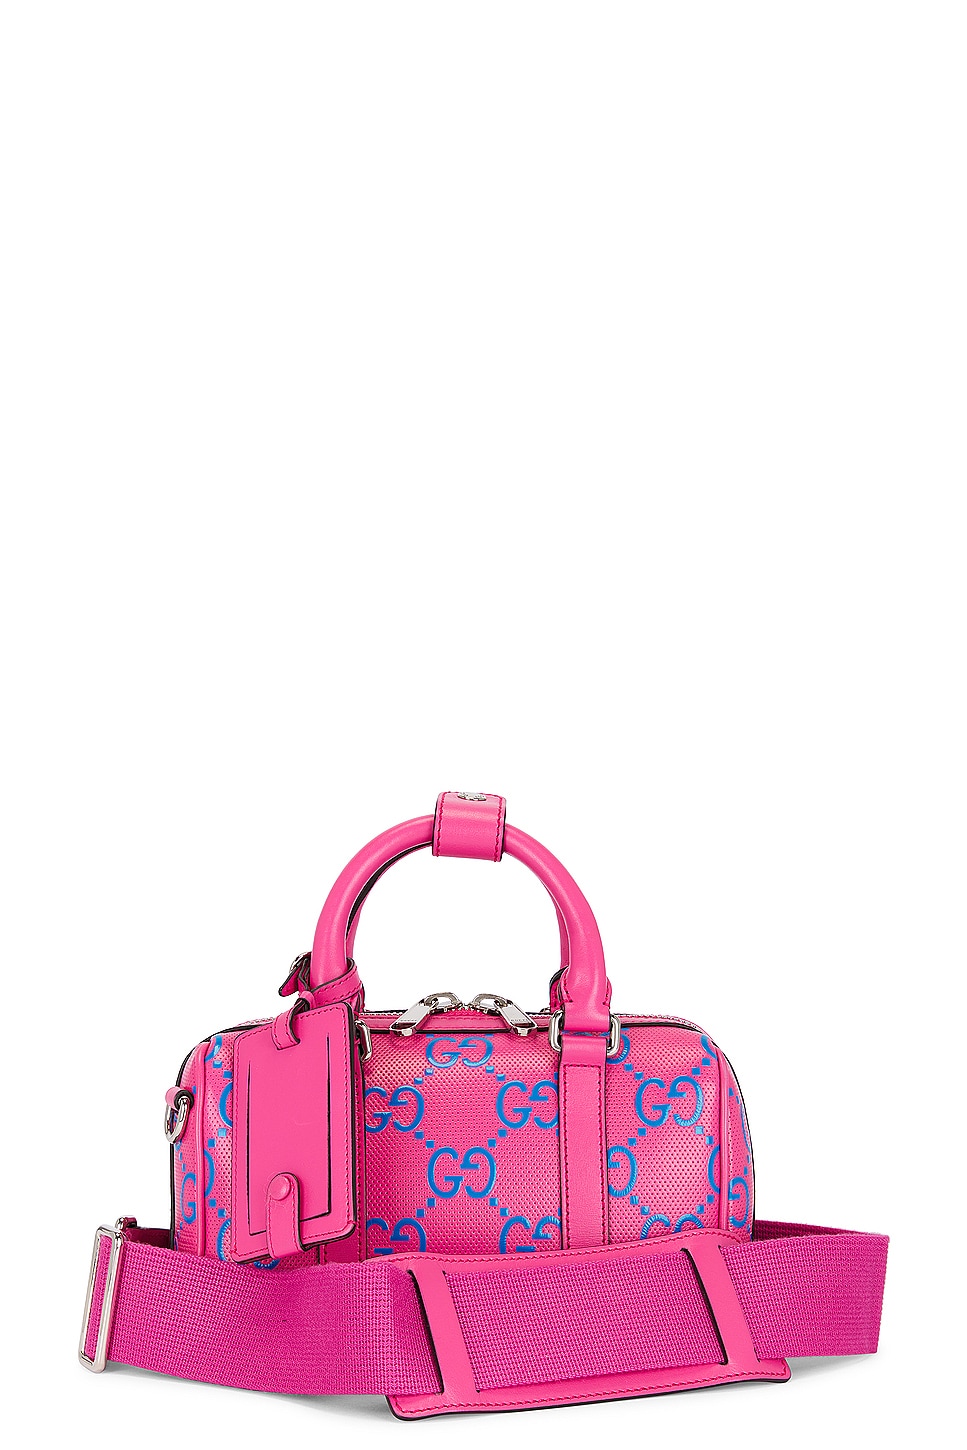 GG 2 Way Handbag in Pink